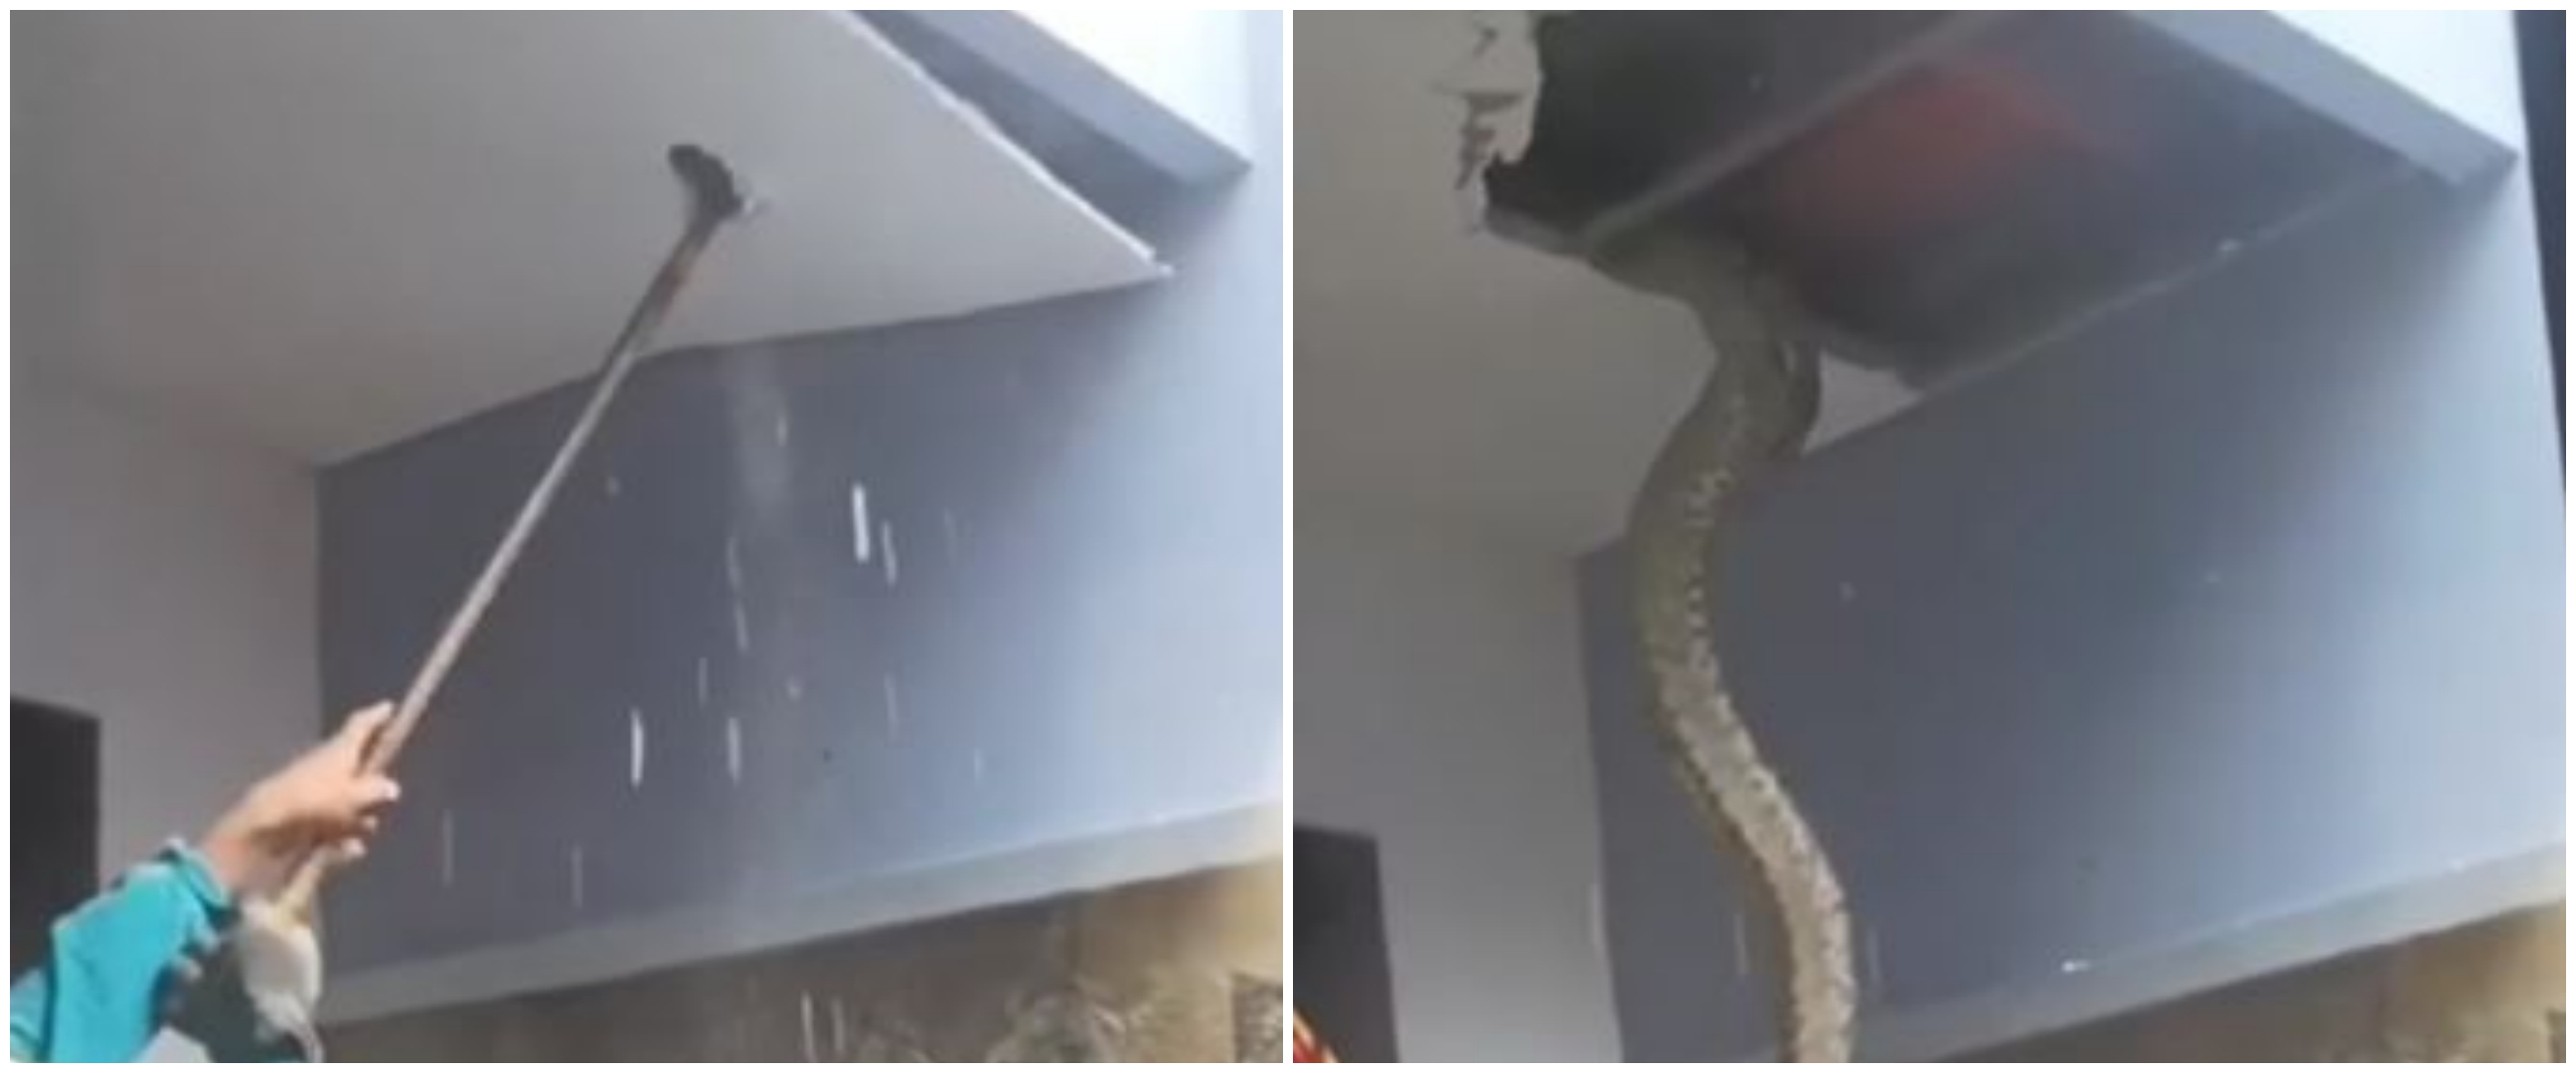 Cara petugas damkar deteksi ada ular besar di plafon rumah ini sepele tapi tepat sasaran